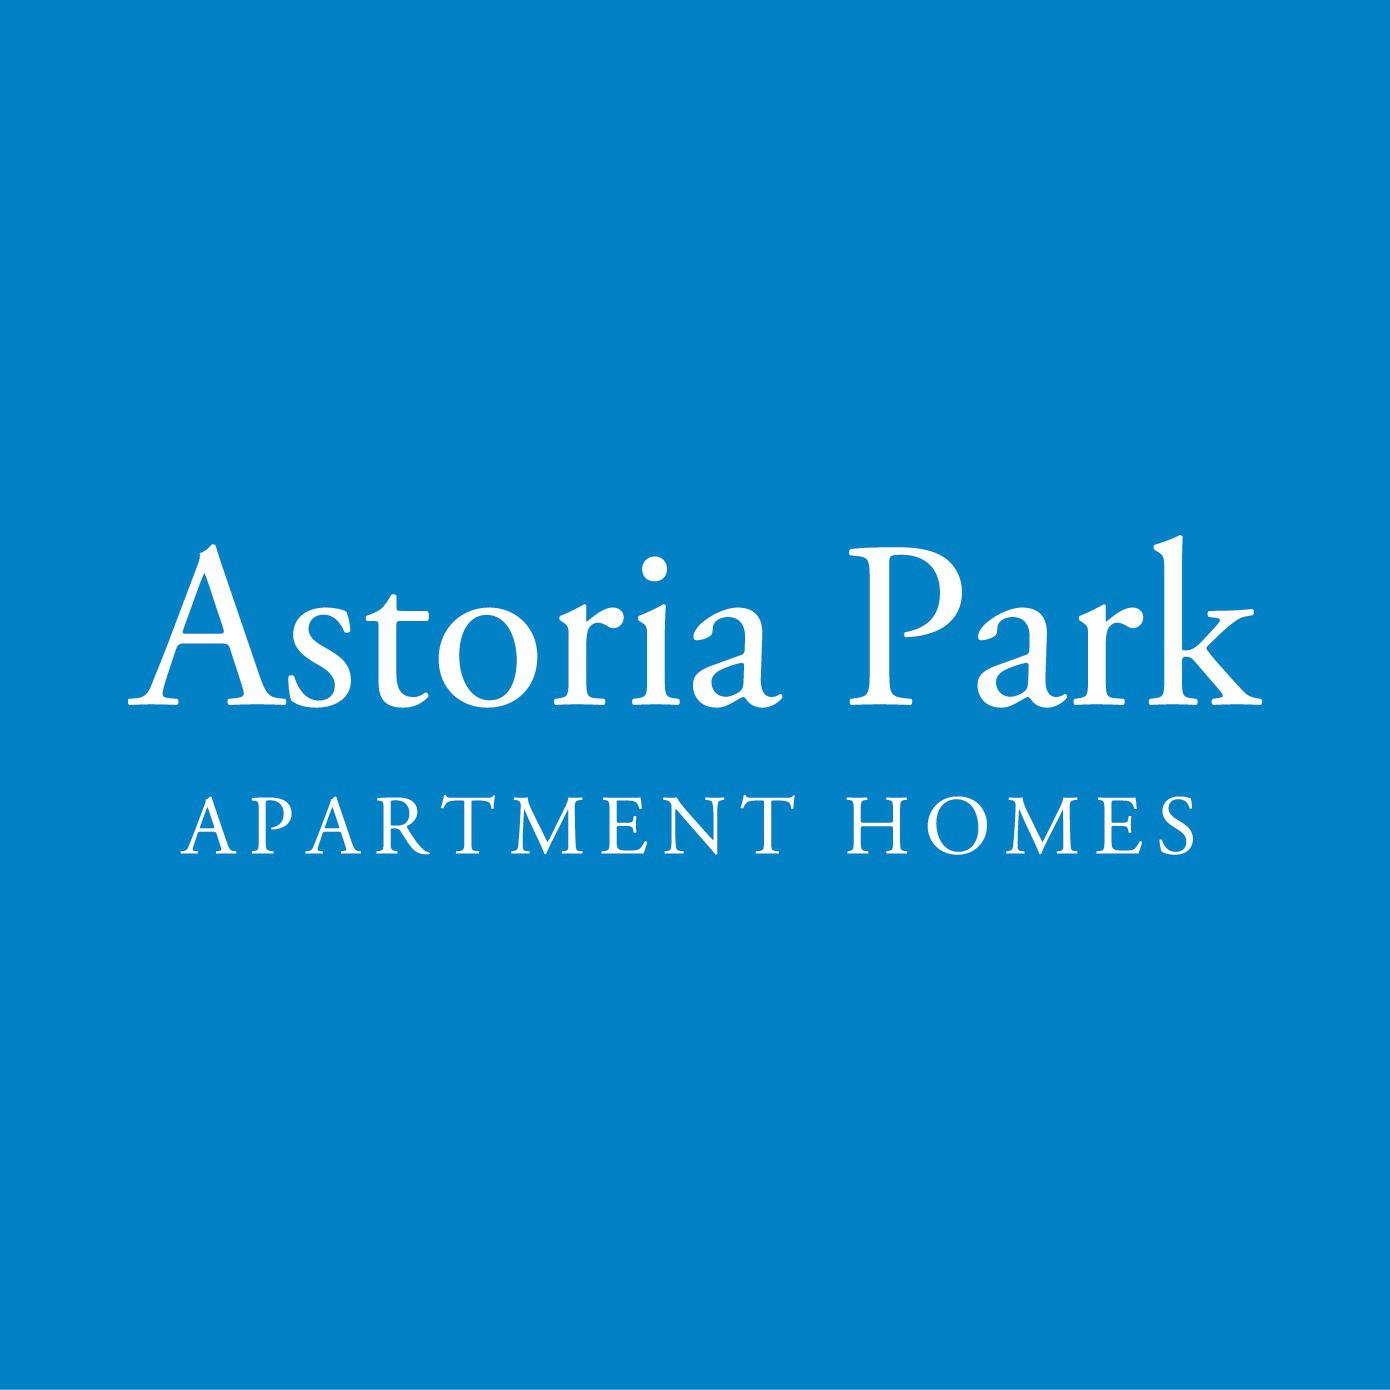 Astoria Park Apartment Homes - Indianapolis, IN 46214 - (317)297-2240 | ShowMeLocal.com